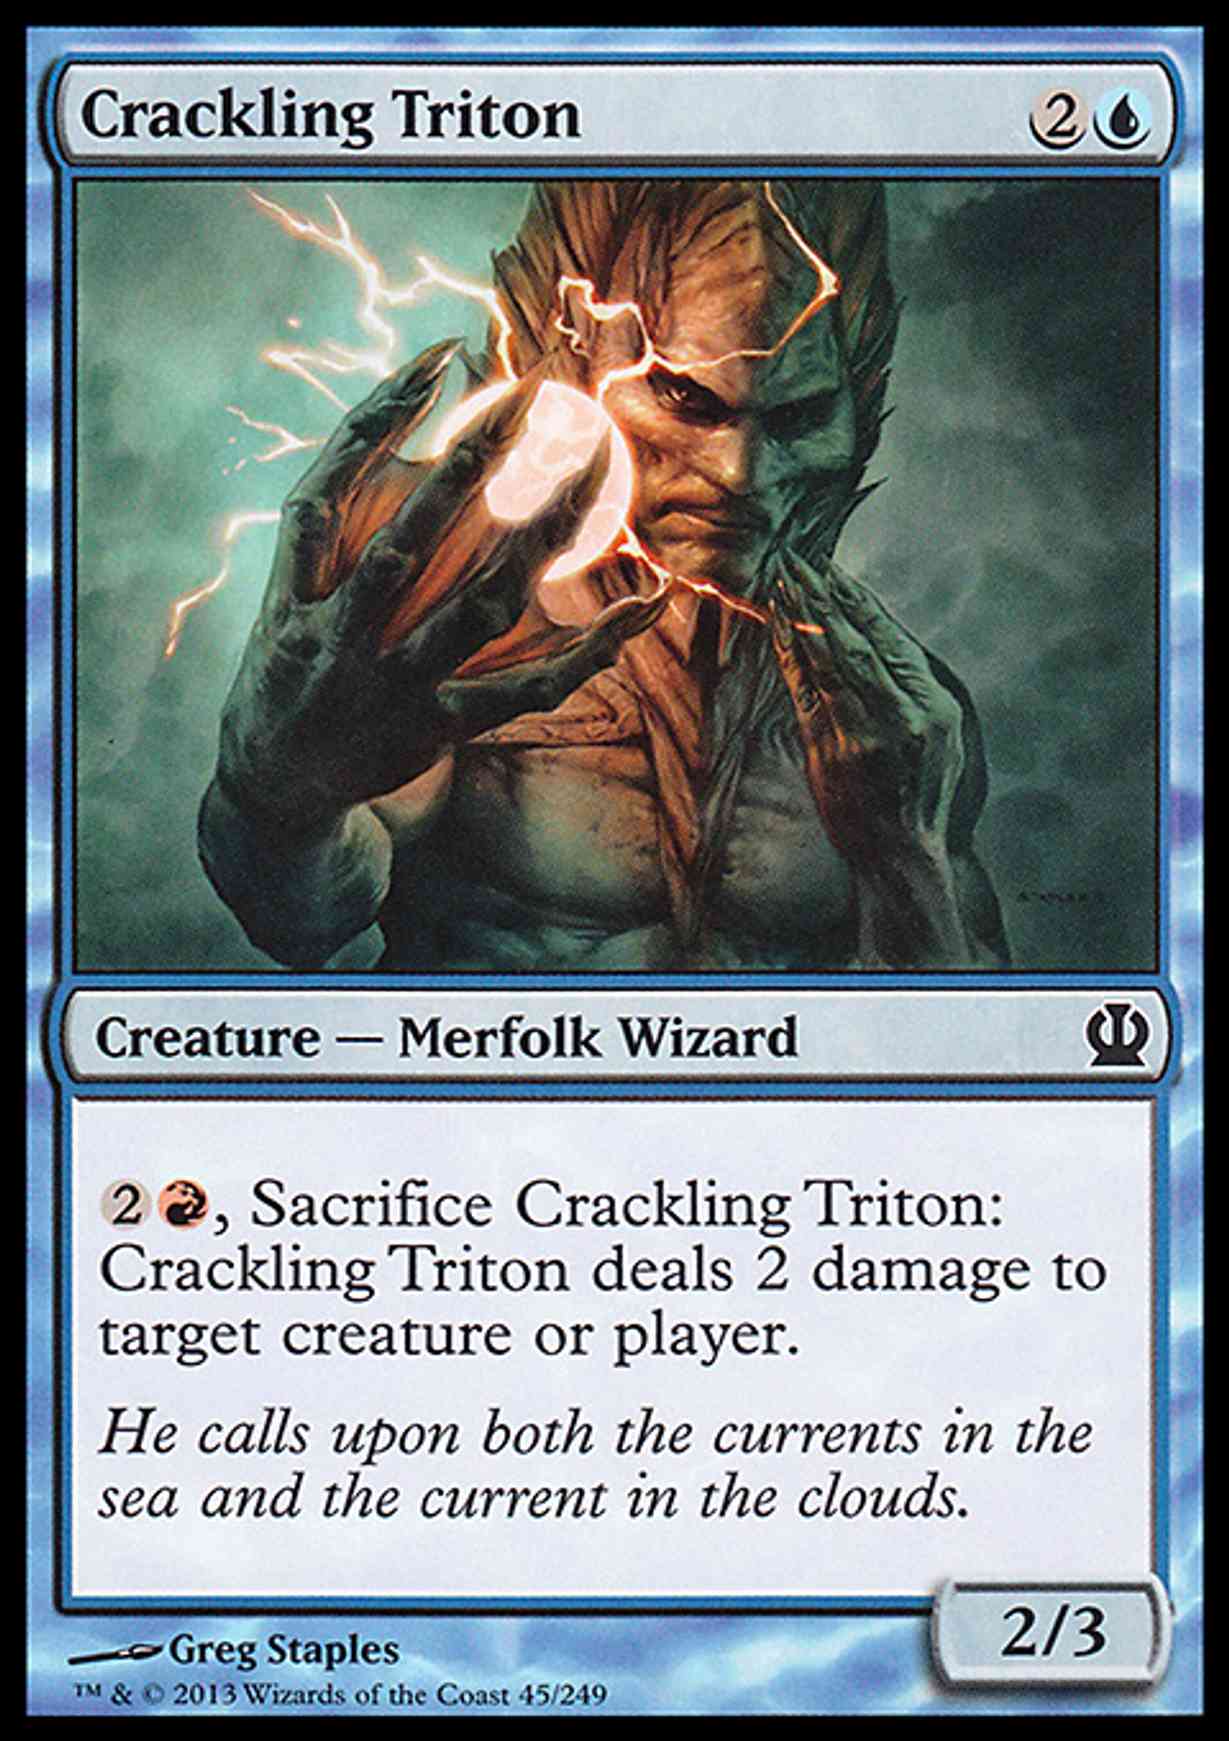 Crackling Triton magic card front